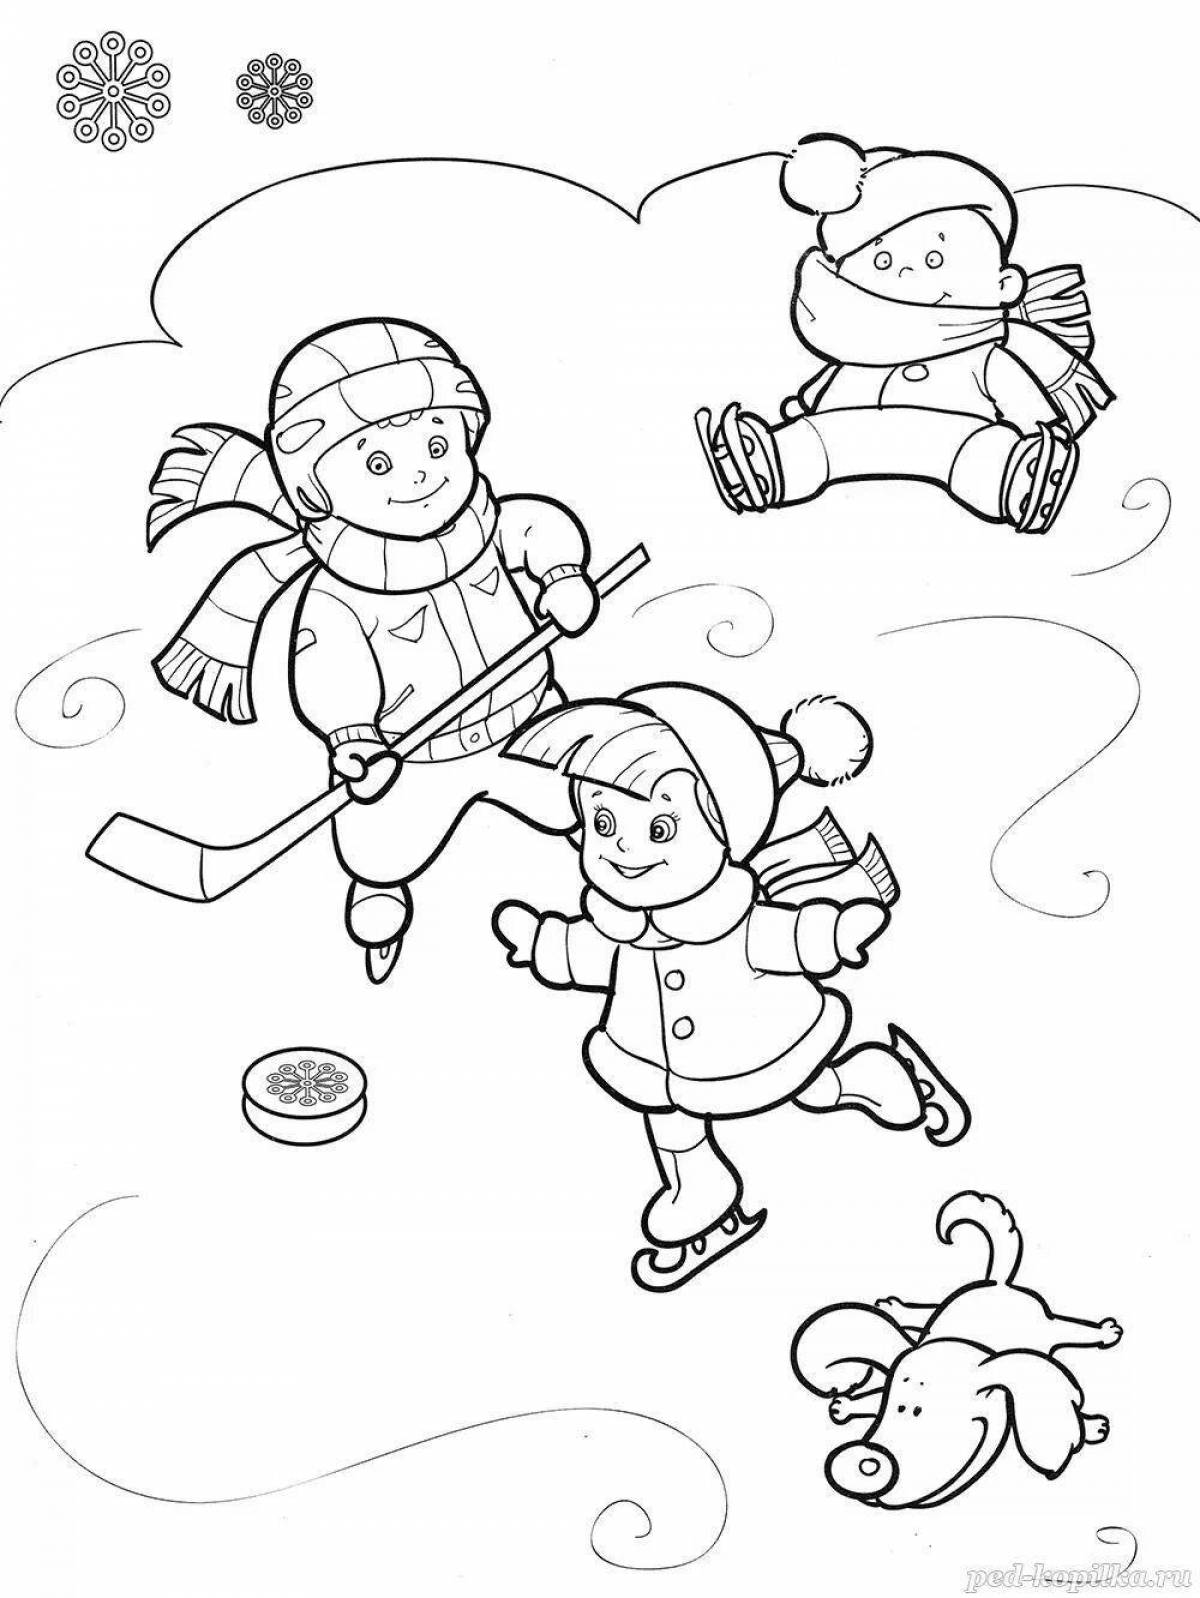 Vibrant coloring book winter sports for children